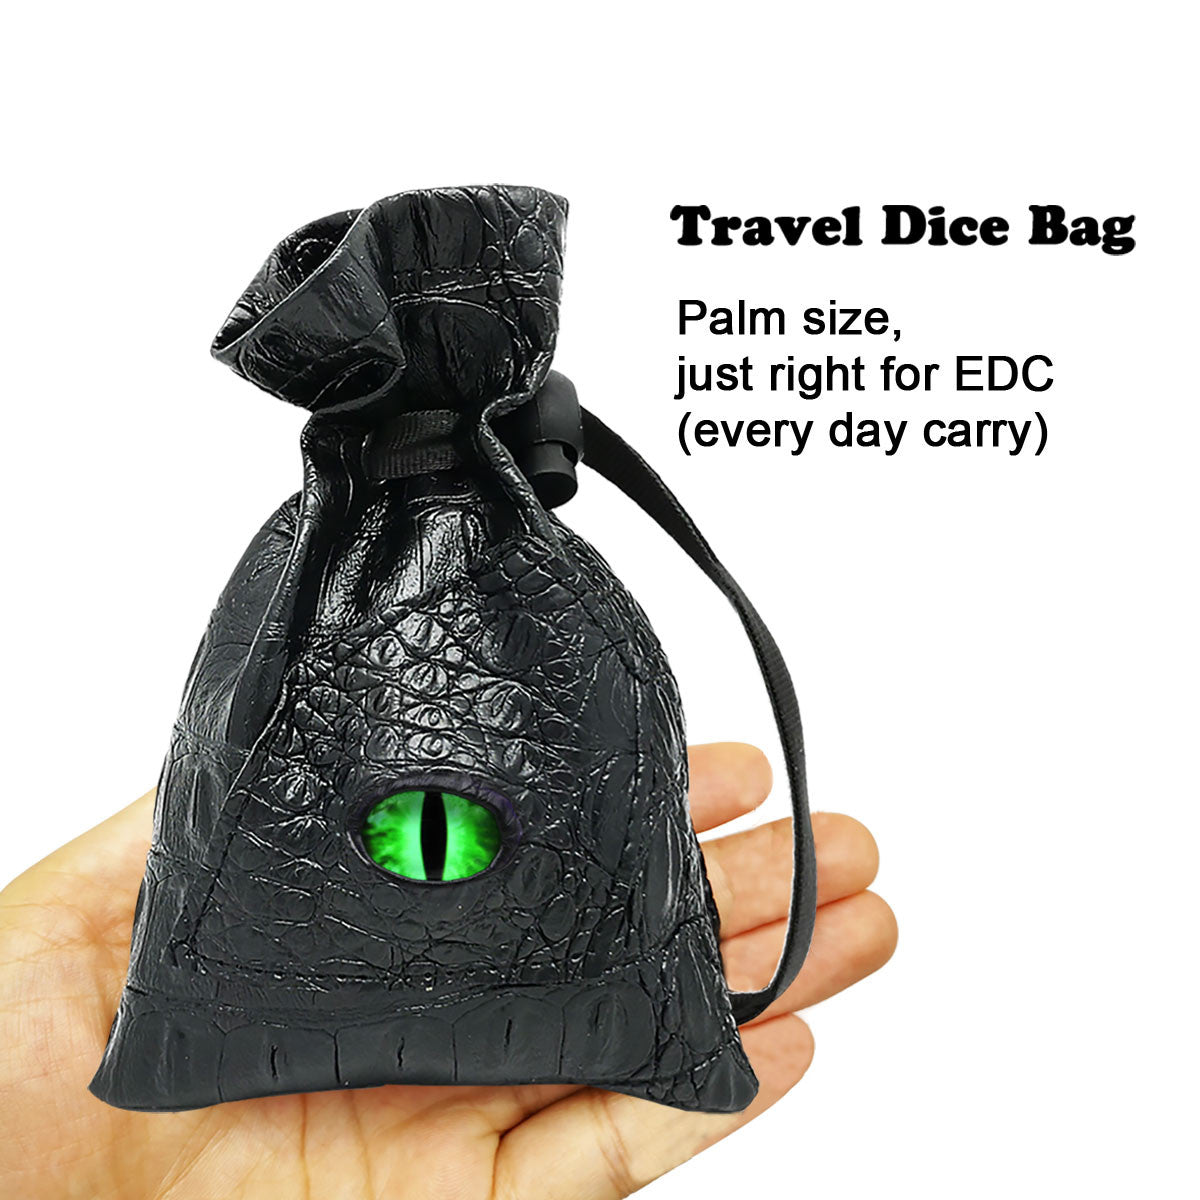 dice bag with green dragon eye